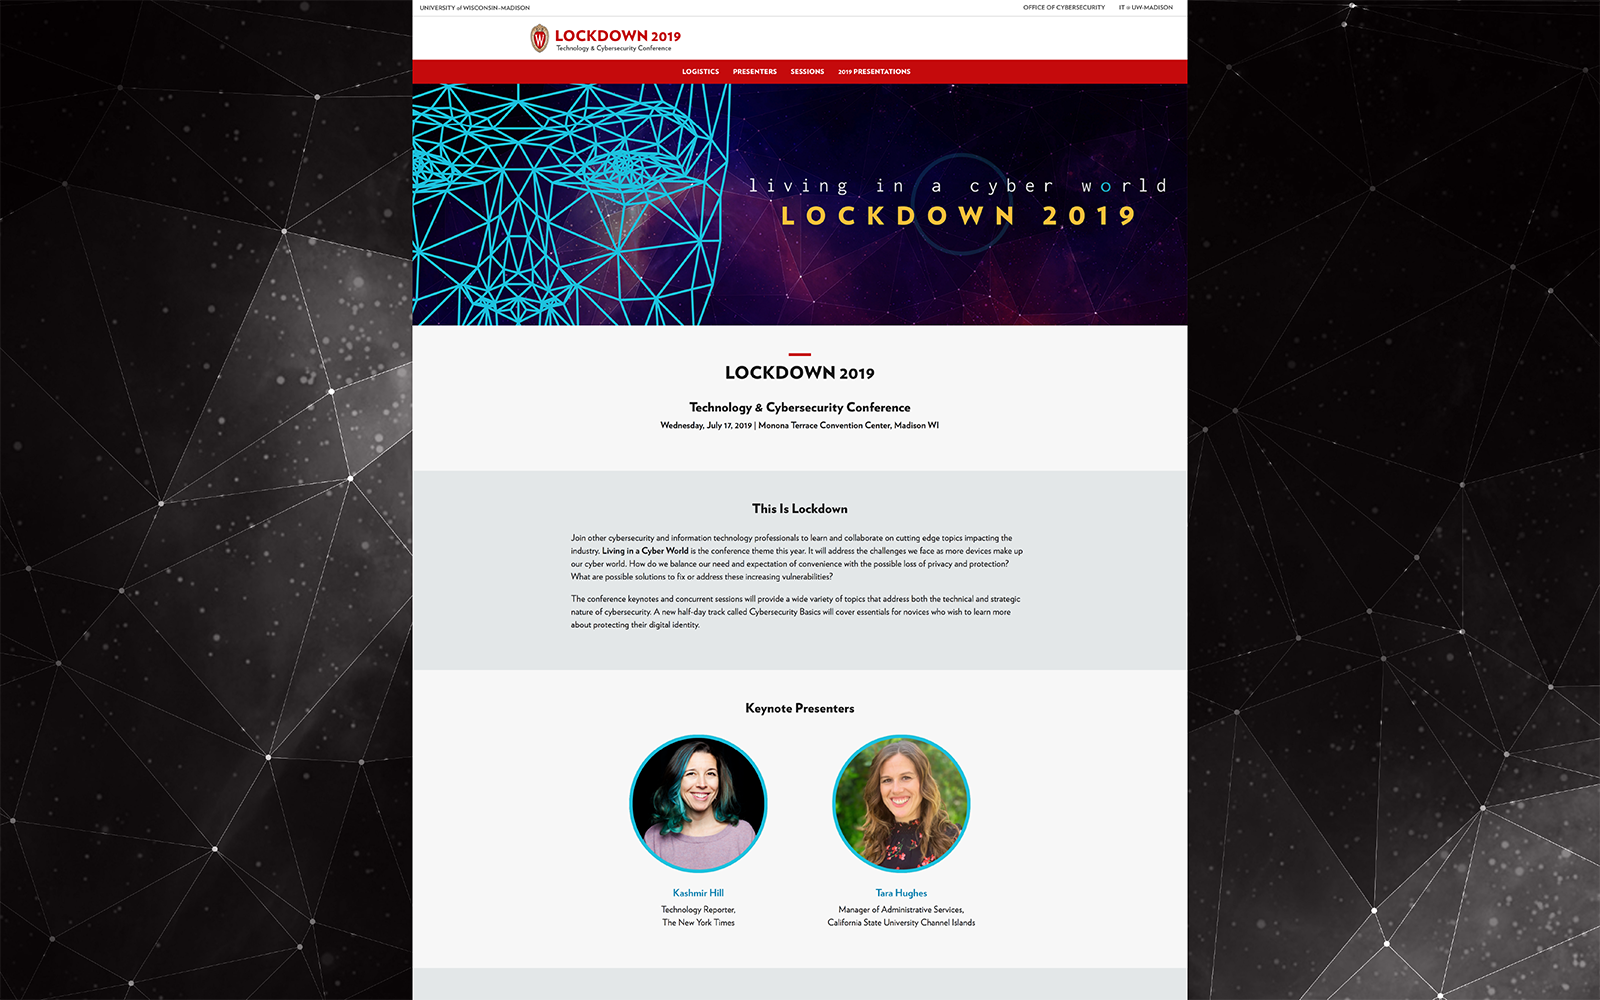 Lockdown presenters web page showing two keynote presenters photos.